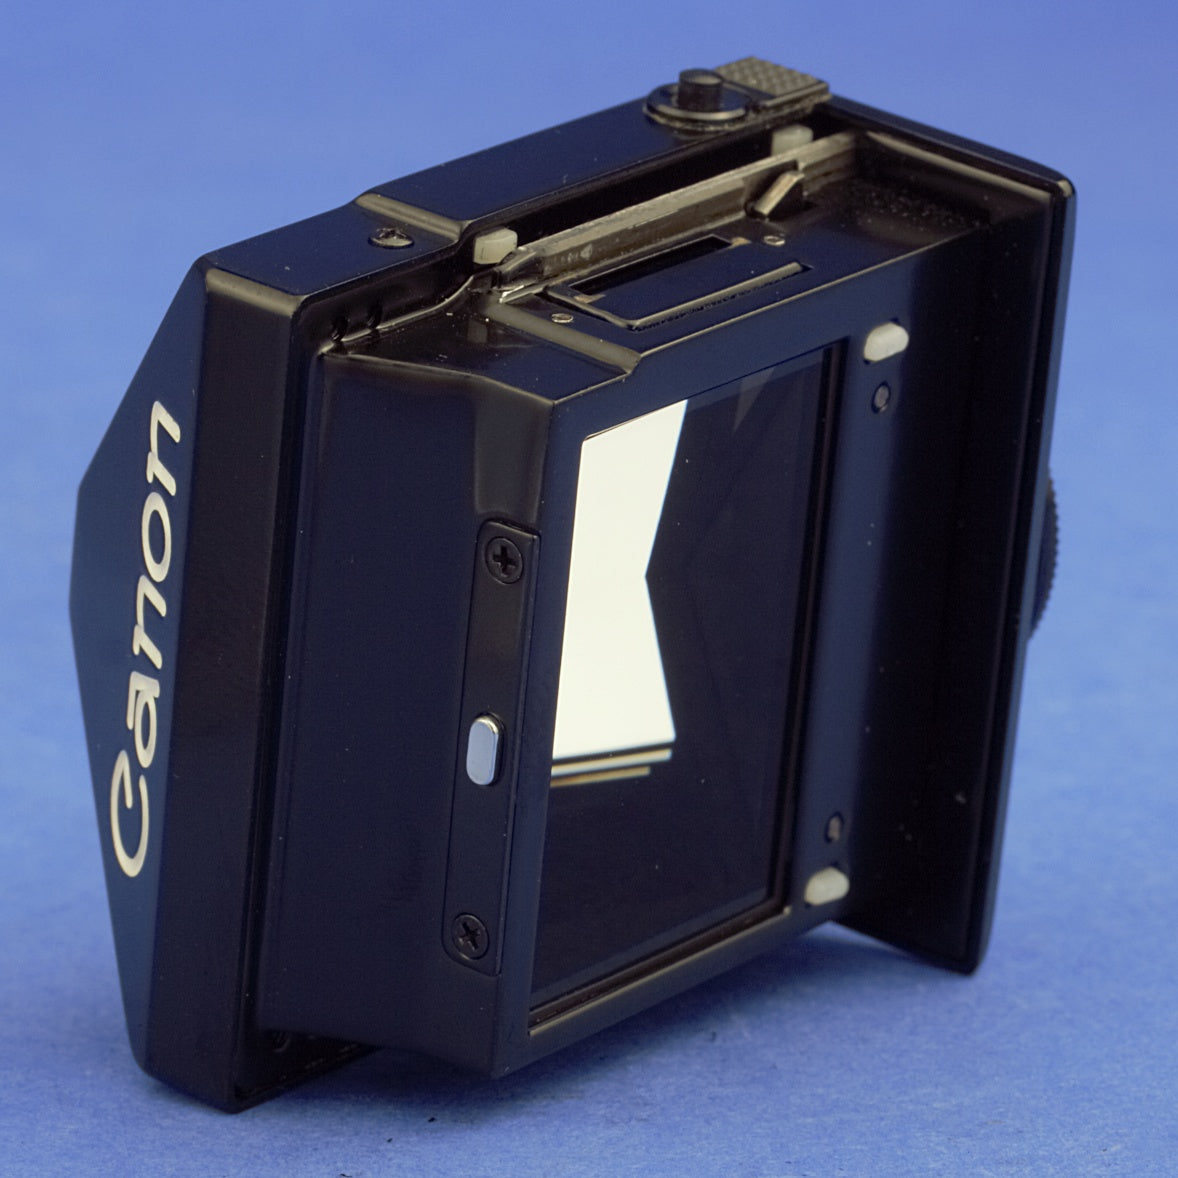 Canon F-1 Prism Finder